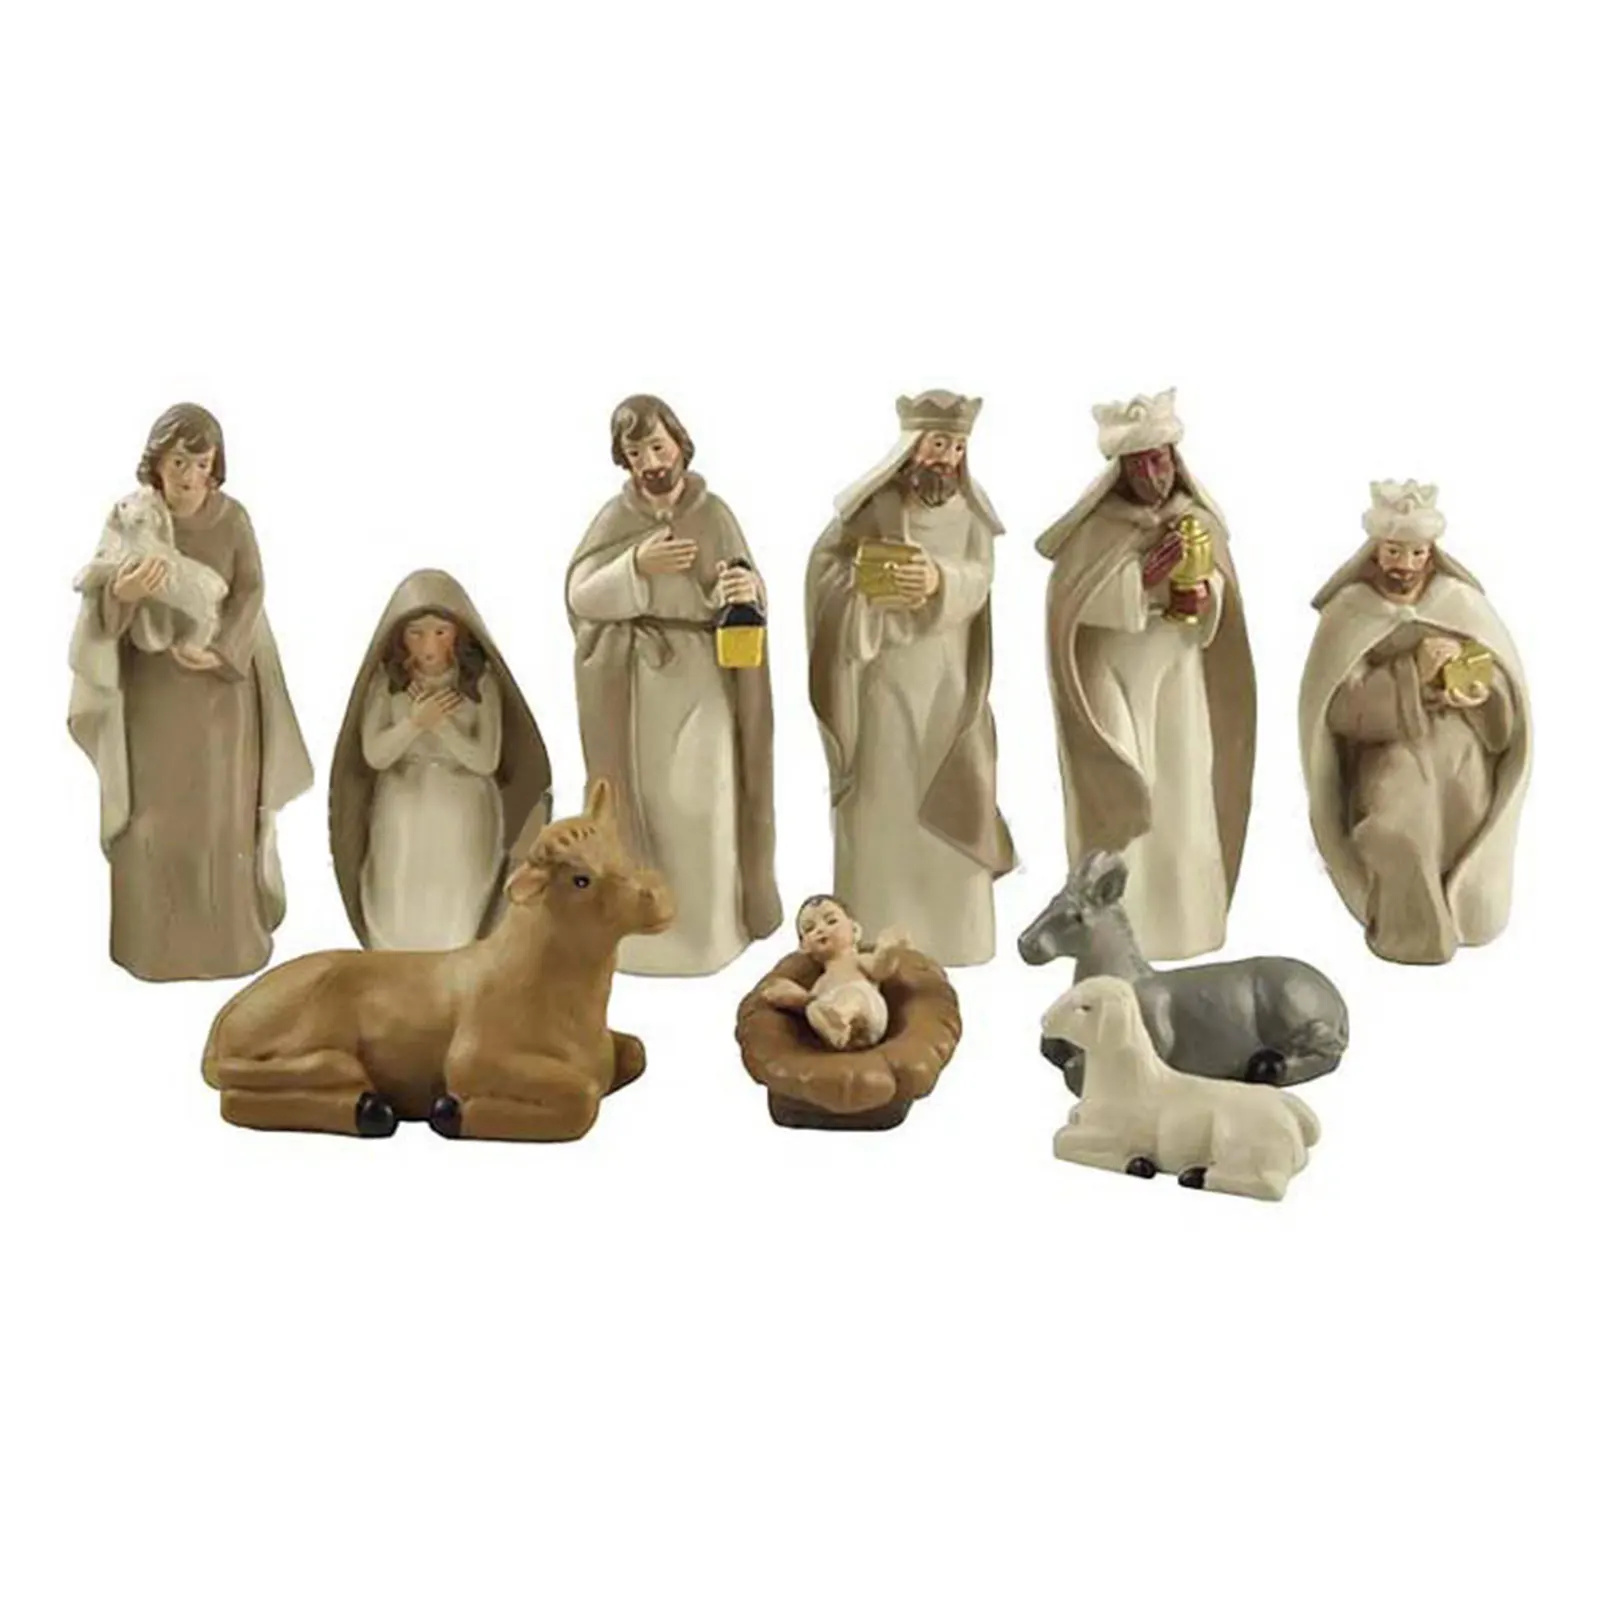 

New Statue Nativity Scene Set Christmas Crib Figurines Baby Jesus Manger Miniatures Ornament Church Catholic Gift Home Decor